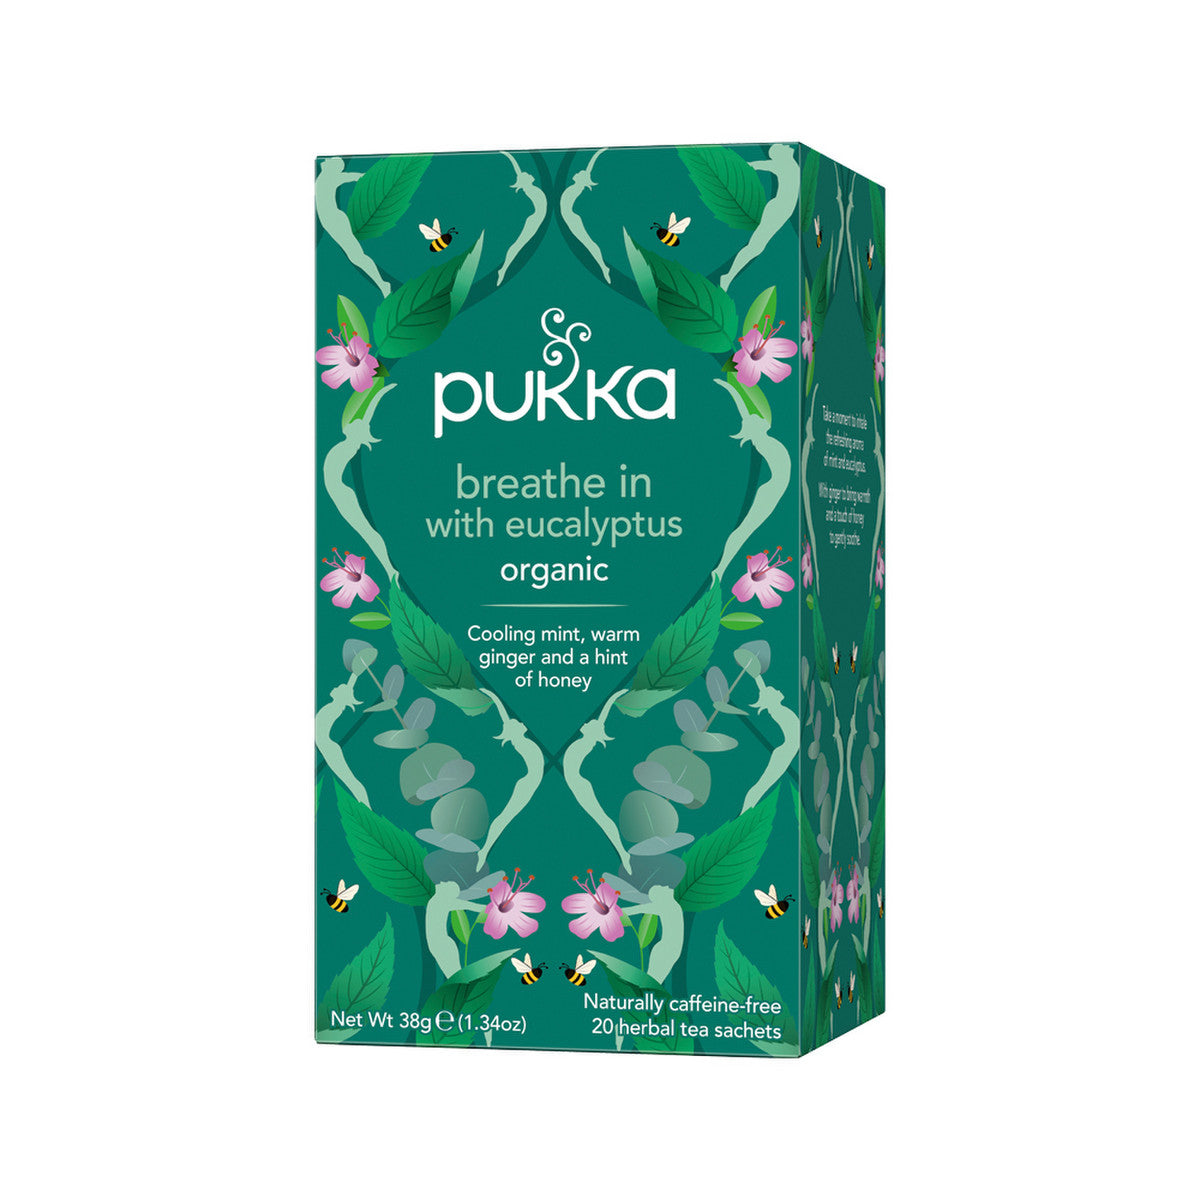 Pukka - Breathe in With Eucalyptus